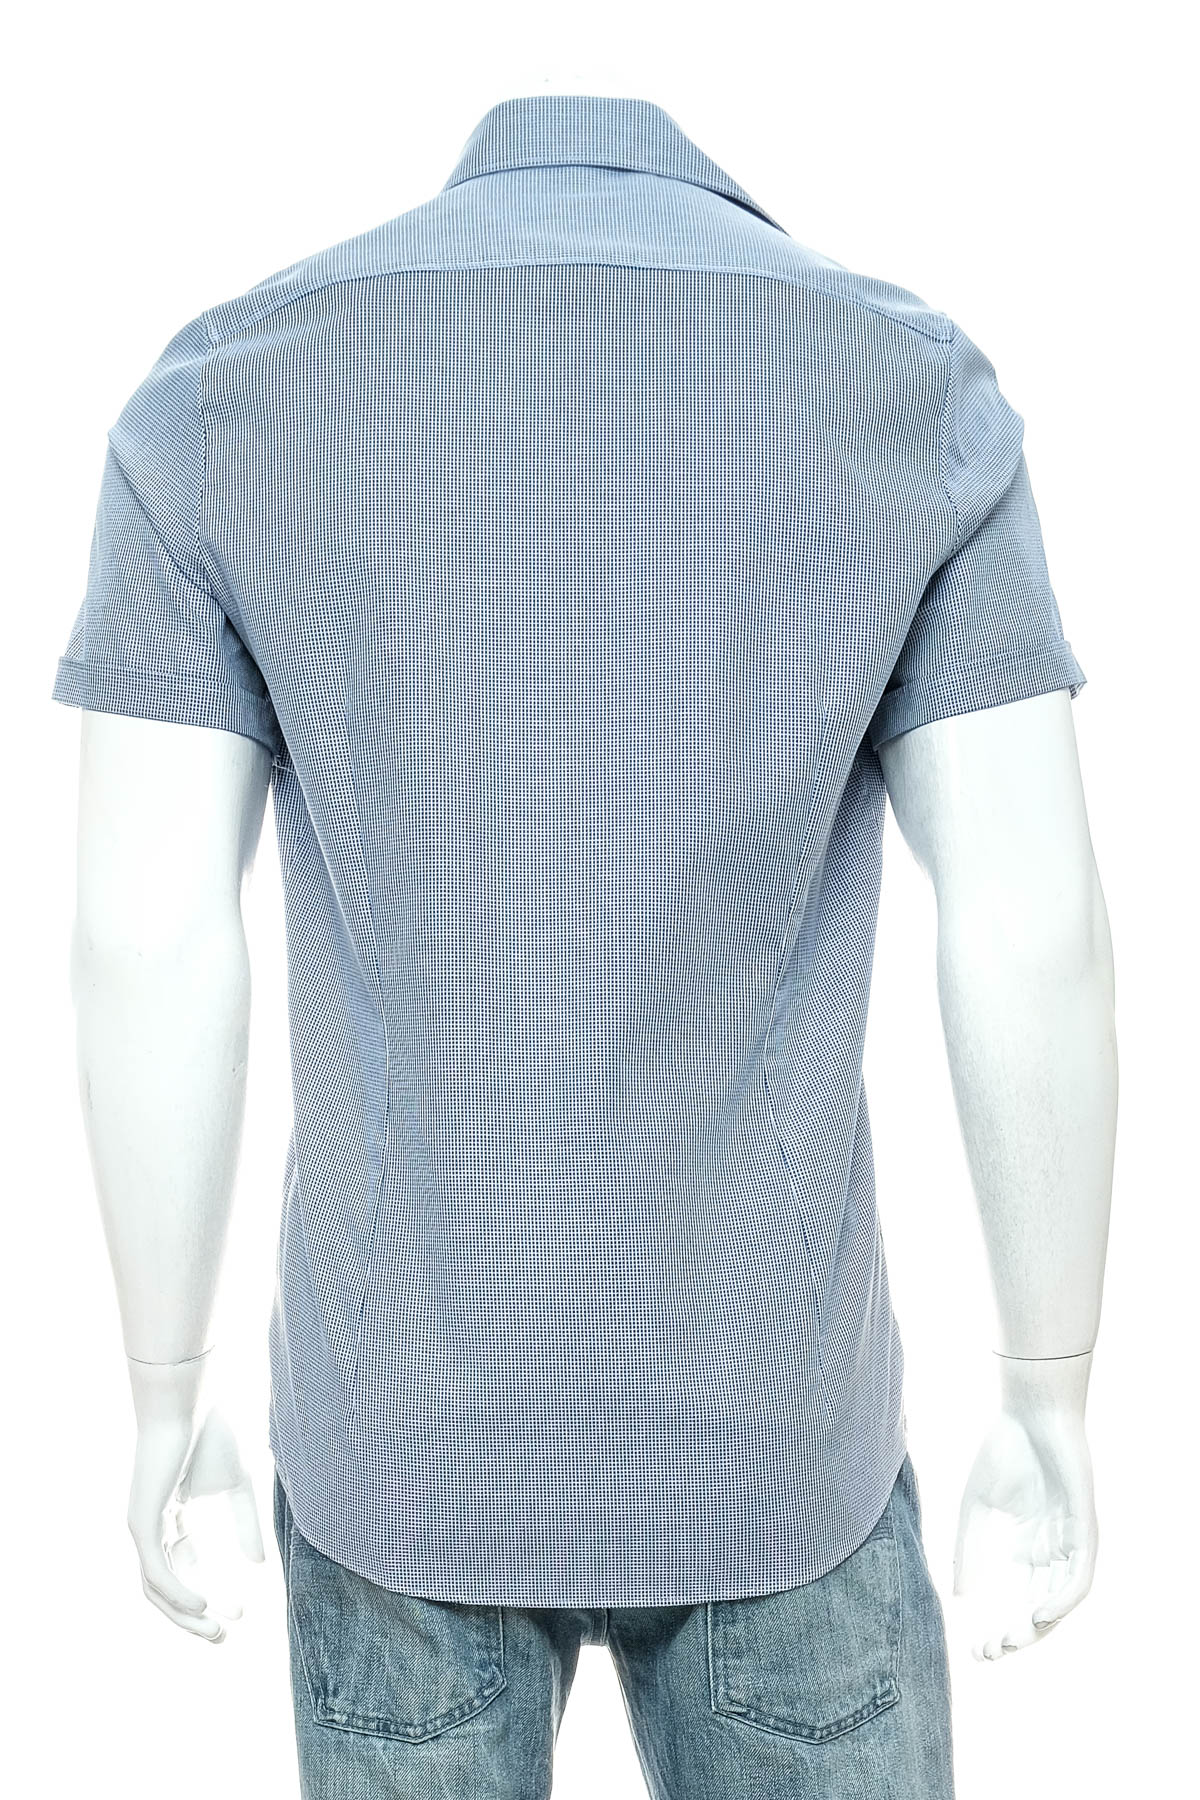 Men's shirt - Olymp - 1